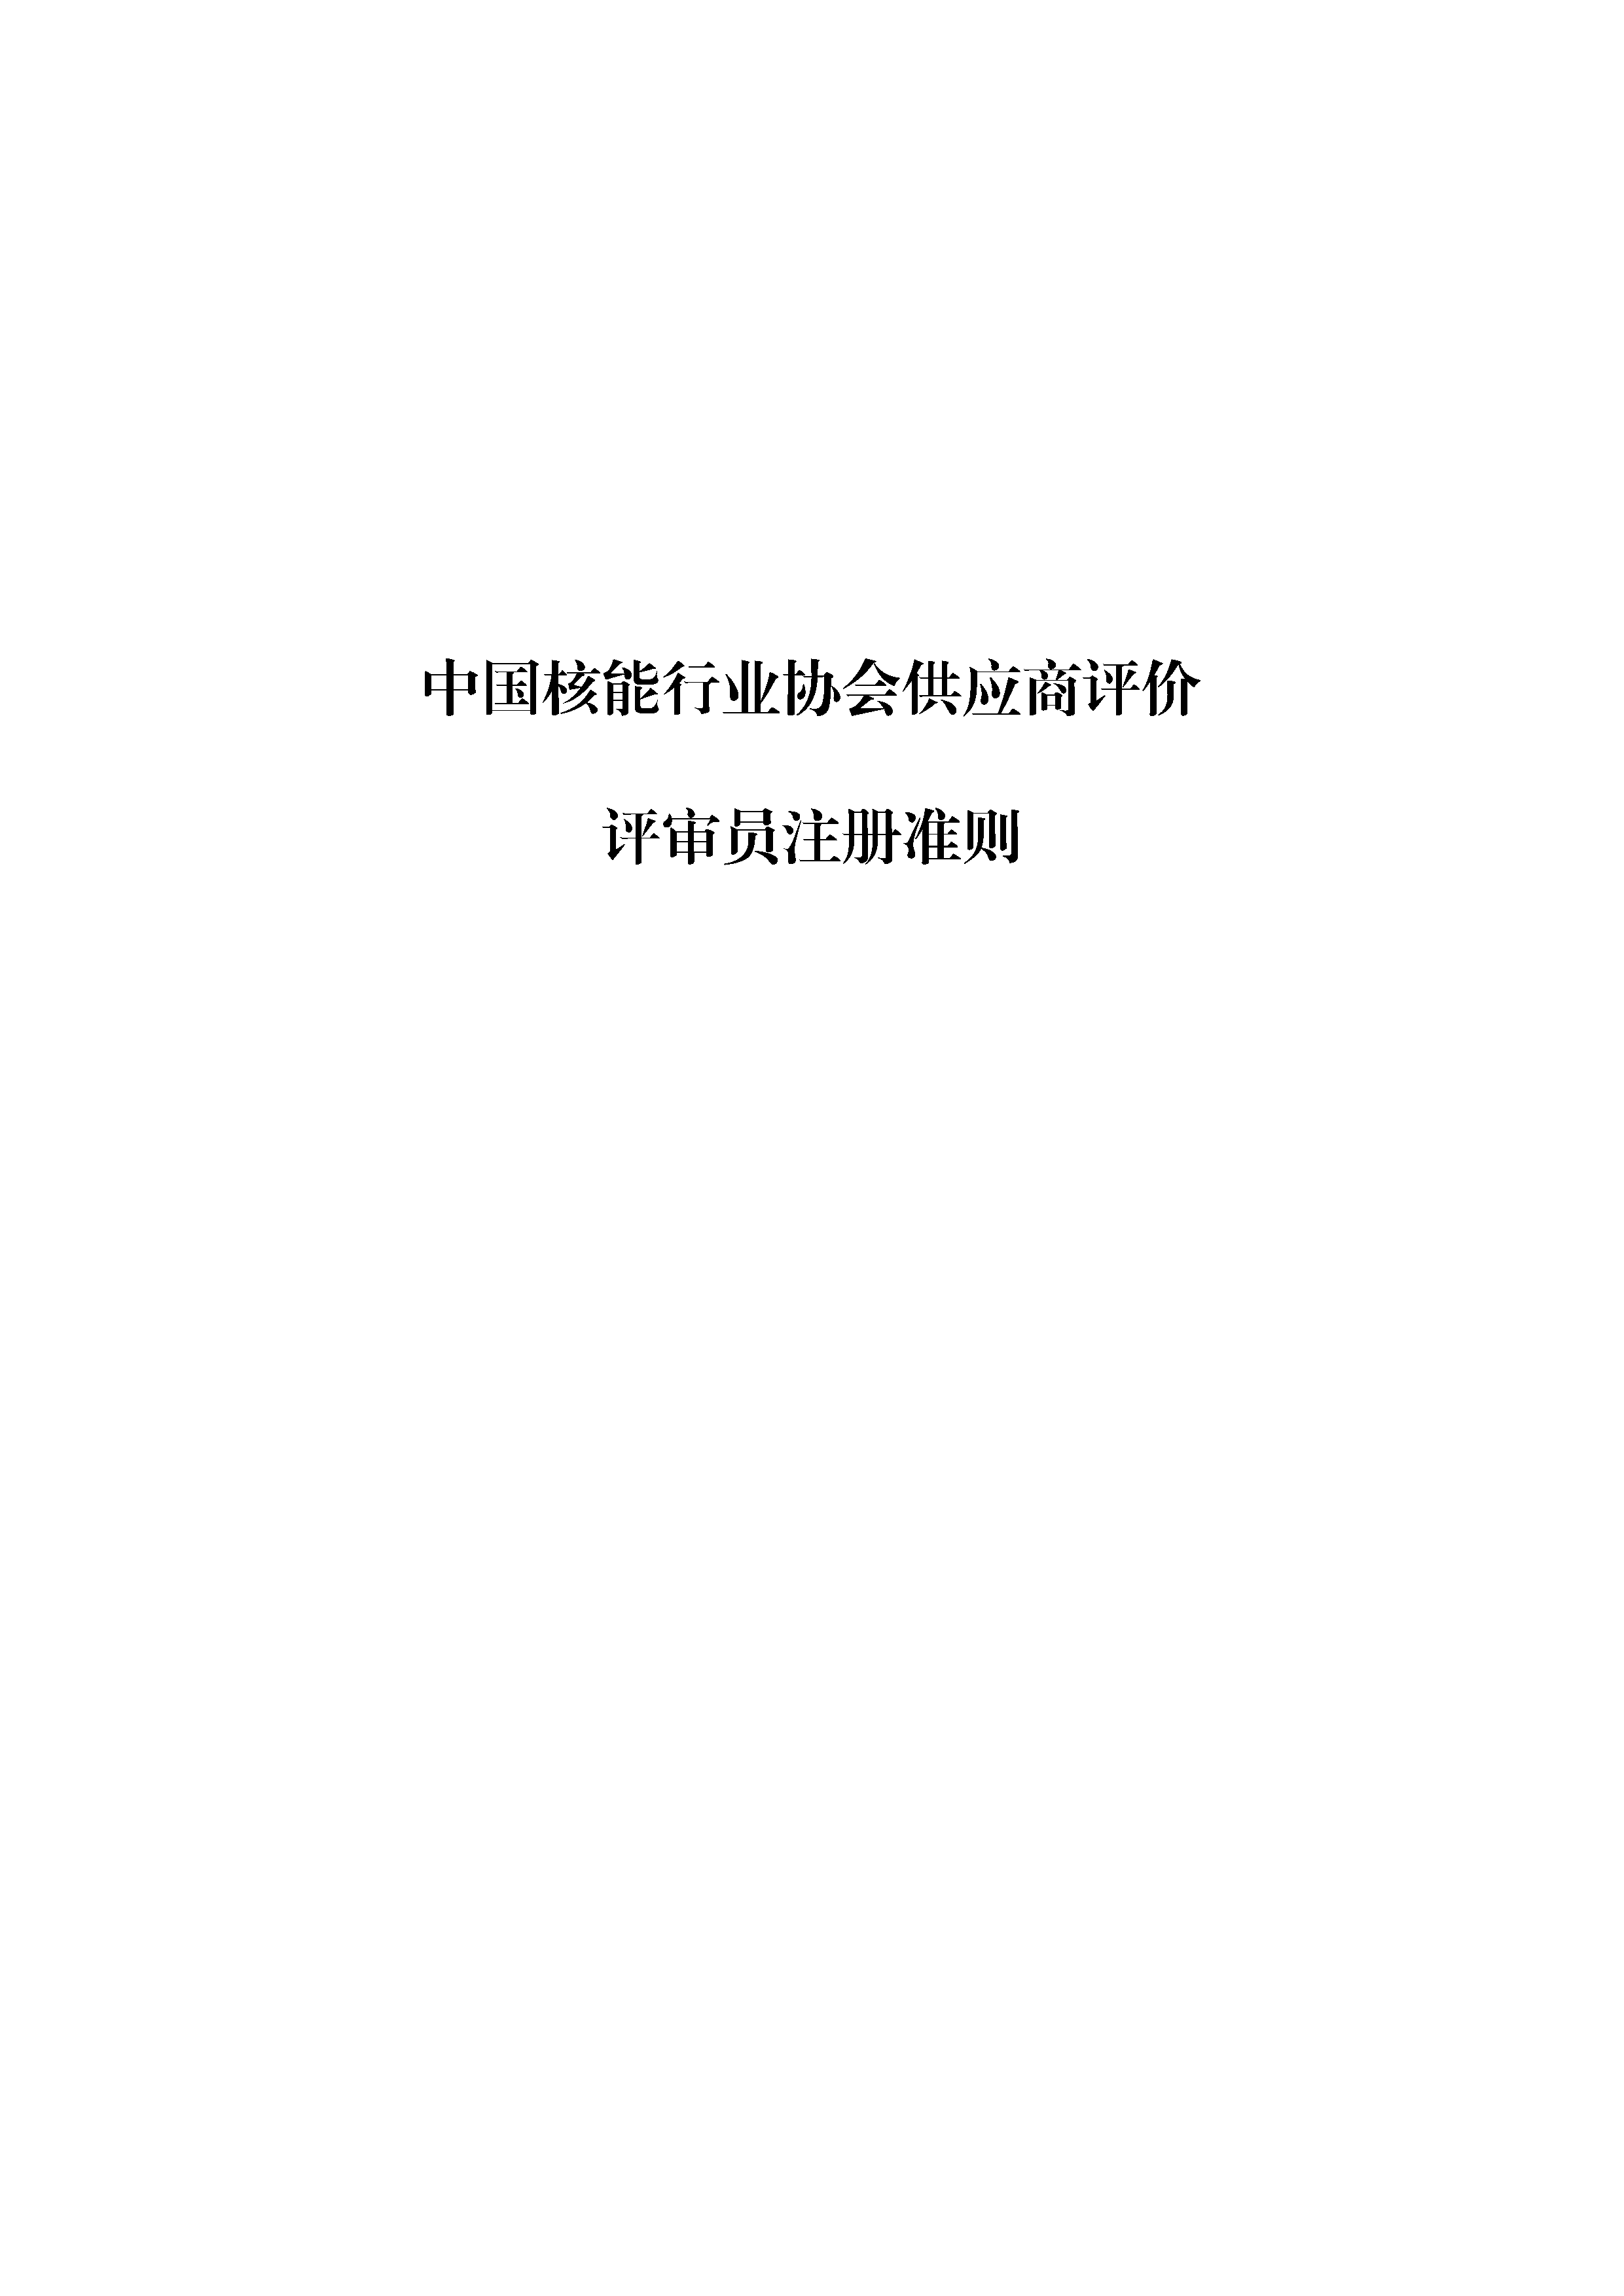 B.5《中国核能行业协会供应商评价评审员注册准则》_页面_01.png